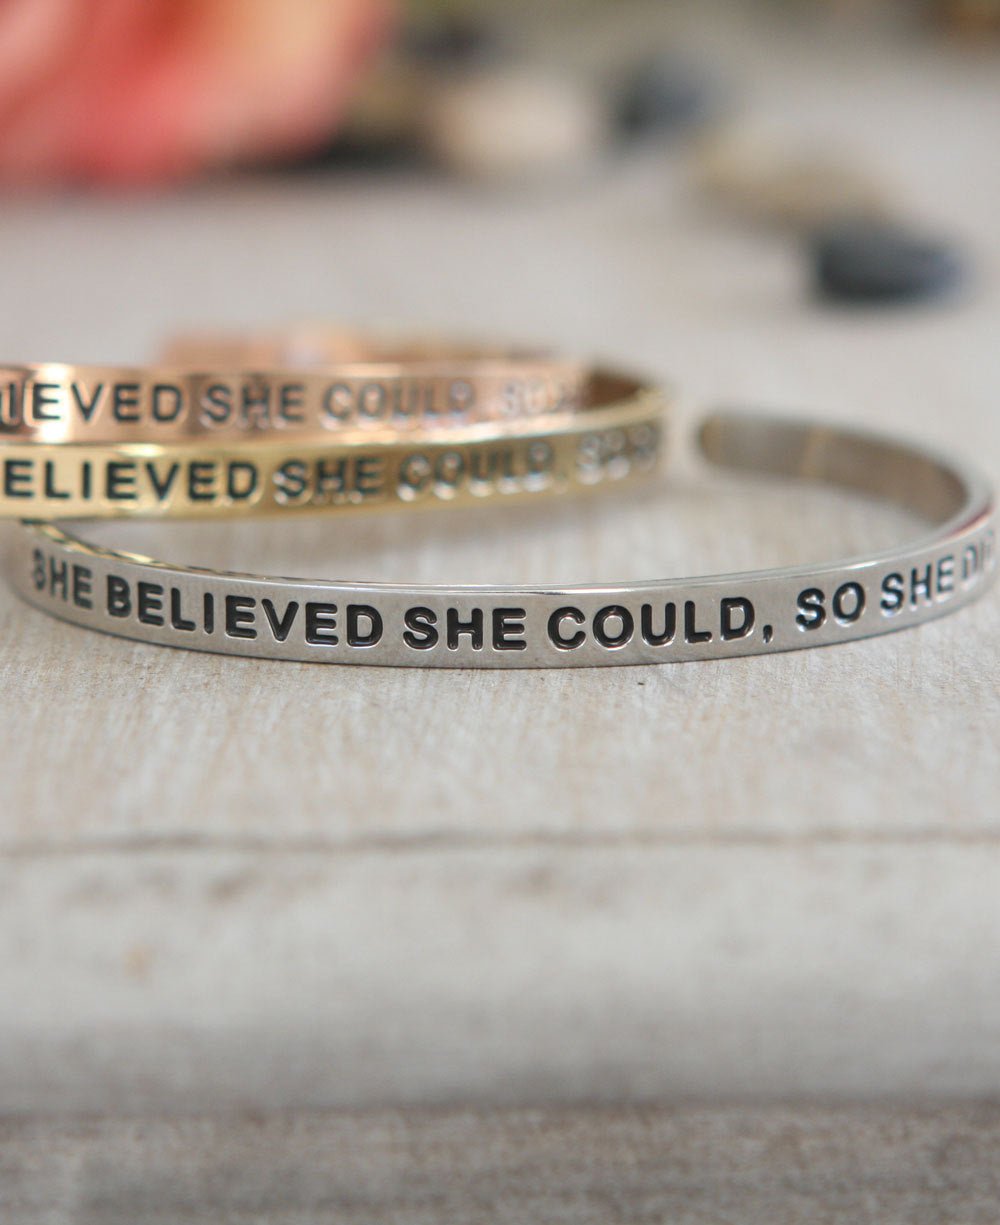 She Believed She Could So She Did, Inspirational Cuff Bracelet - Bracelets Silver